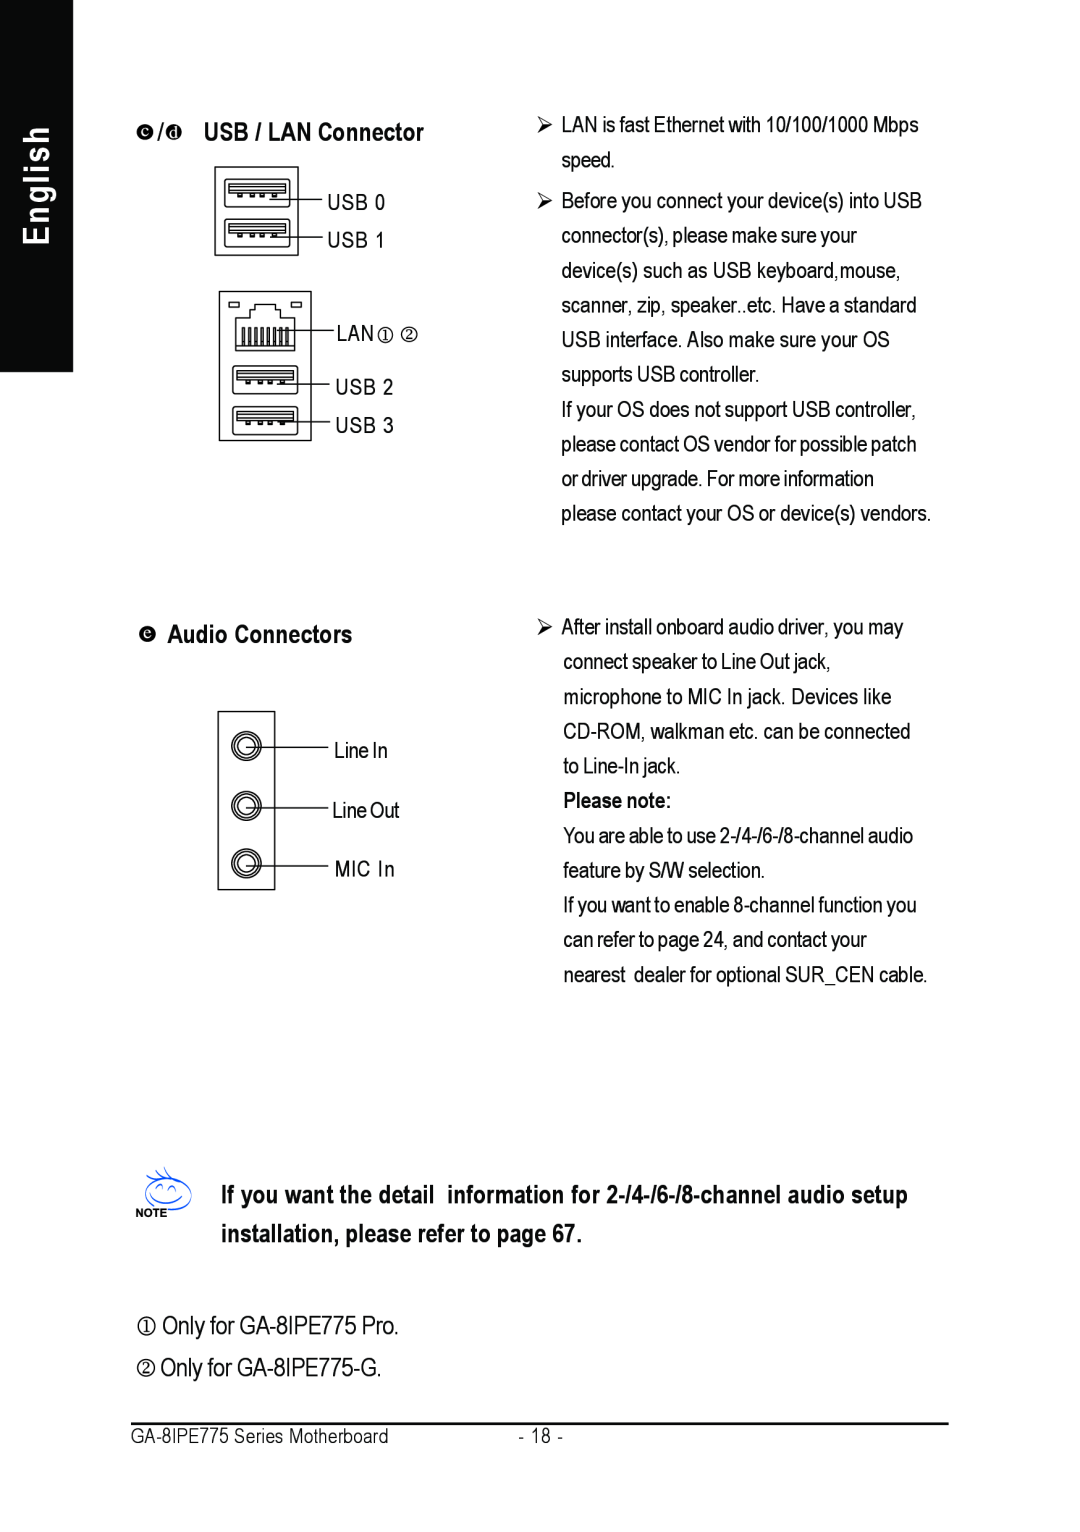 Gigabyte AGP 4X/8X manual English, Audio Connectors, USB / LAN Connector, Please note 